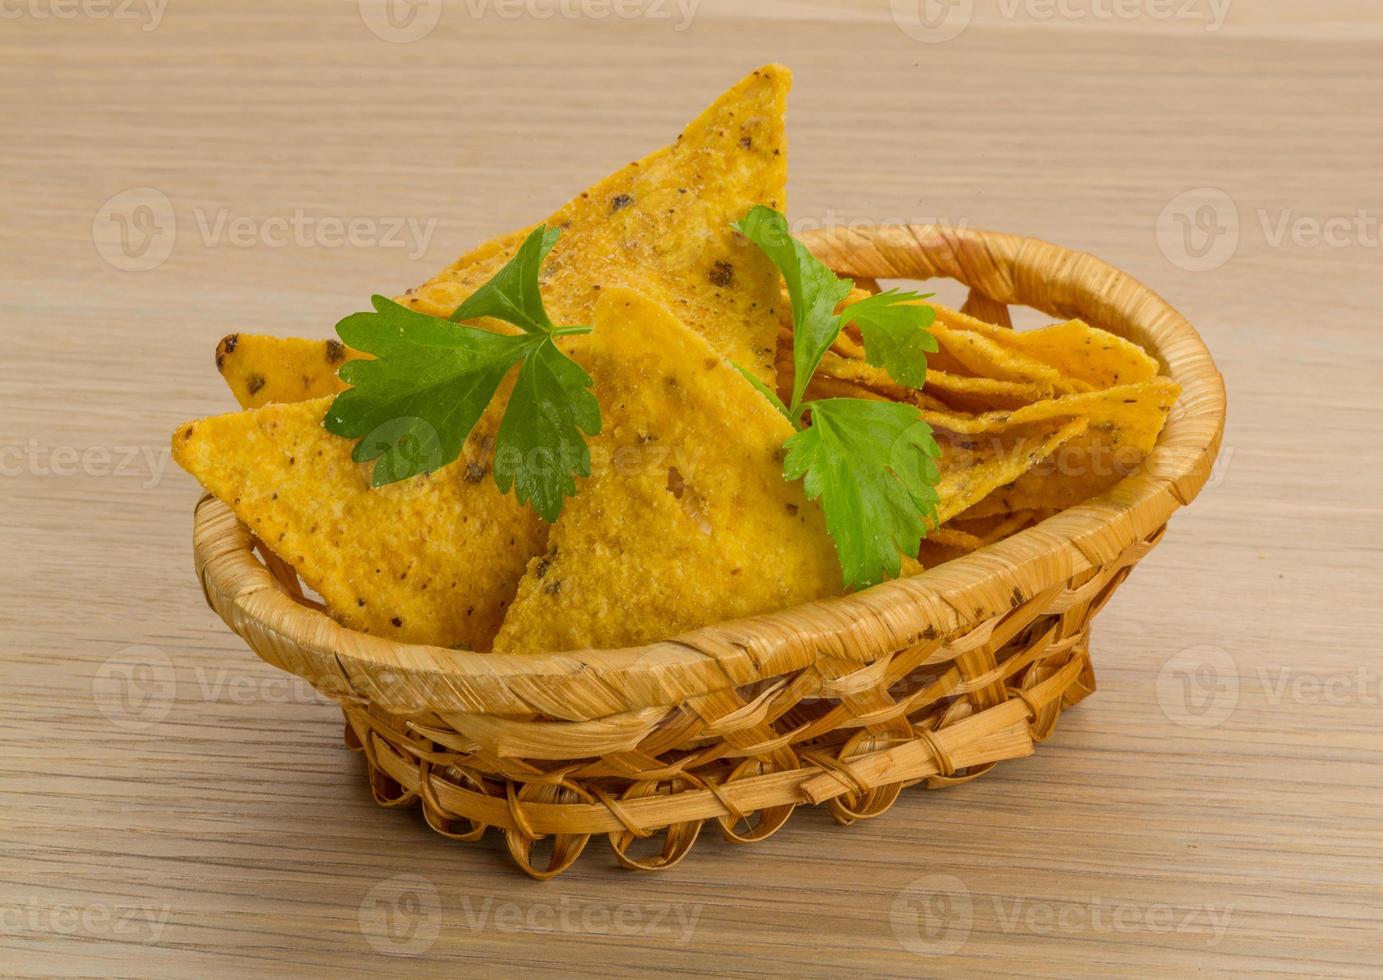 nachos i en korg på trä bakgrund foto